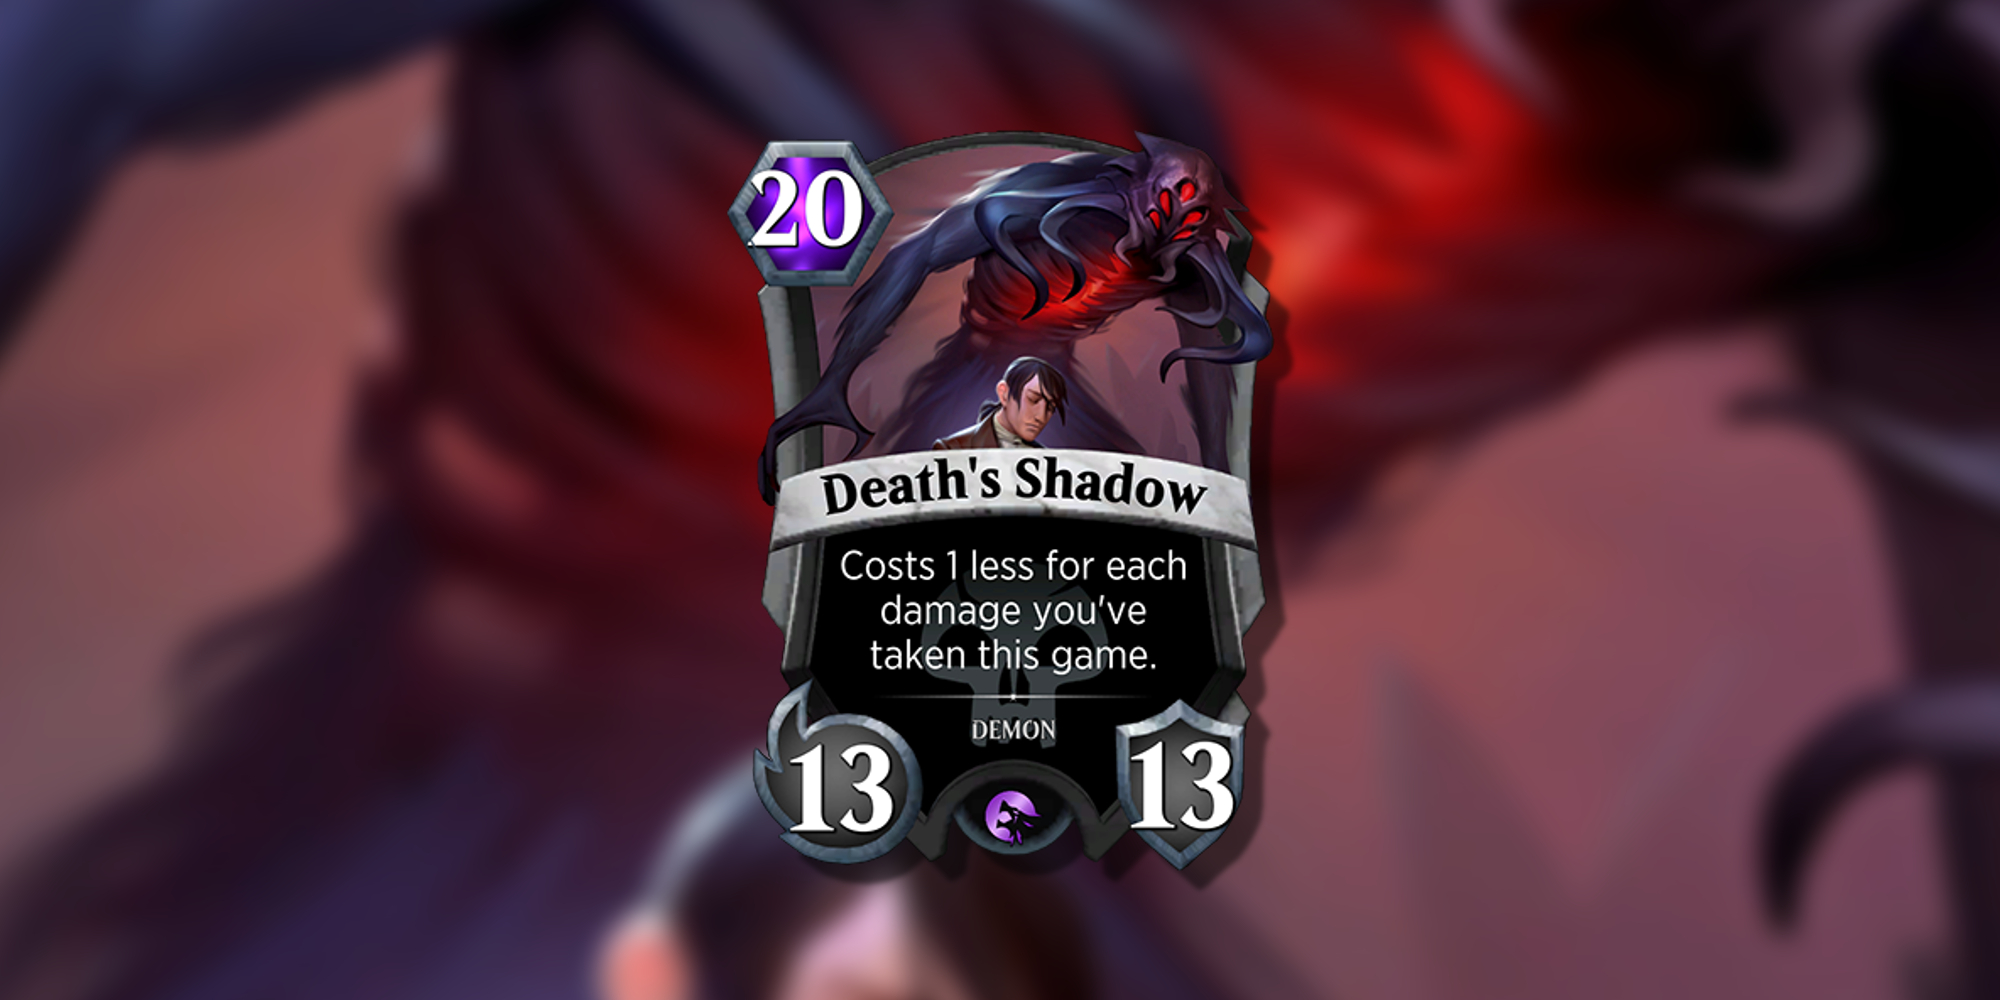 Death’s Shadow